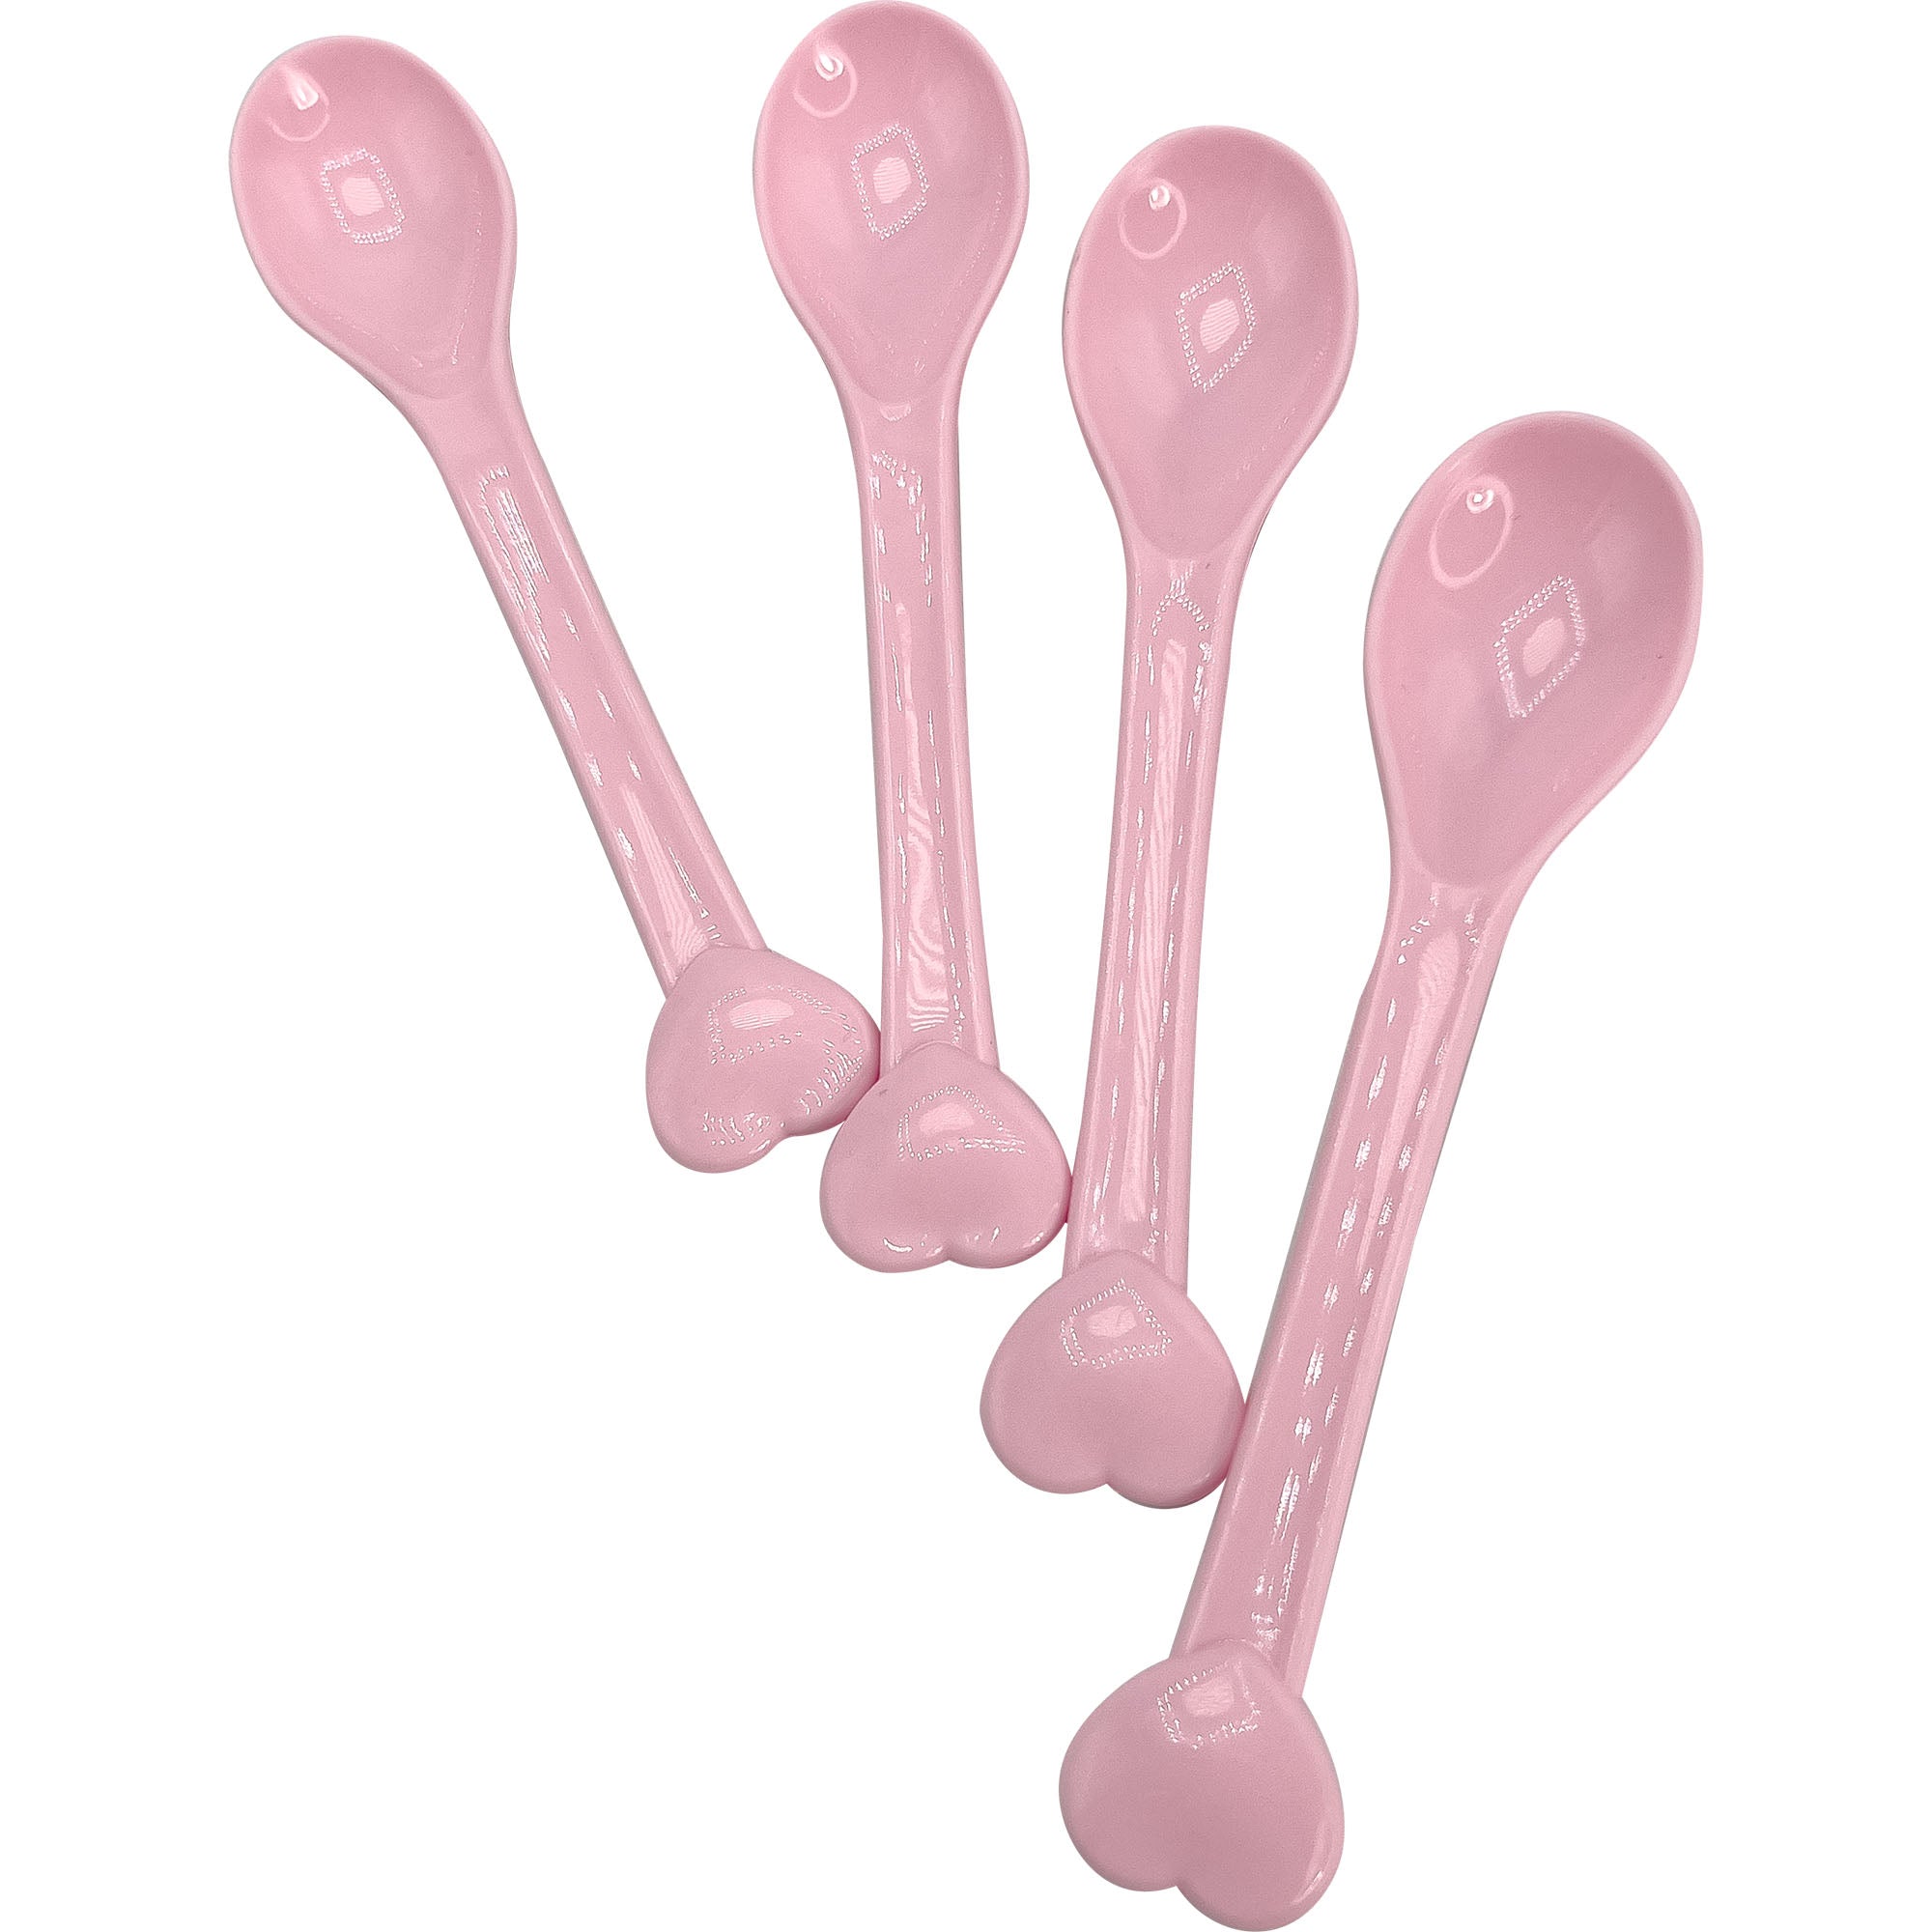 2159 Pk4 Sweetheart Spoons